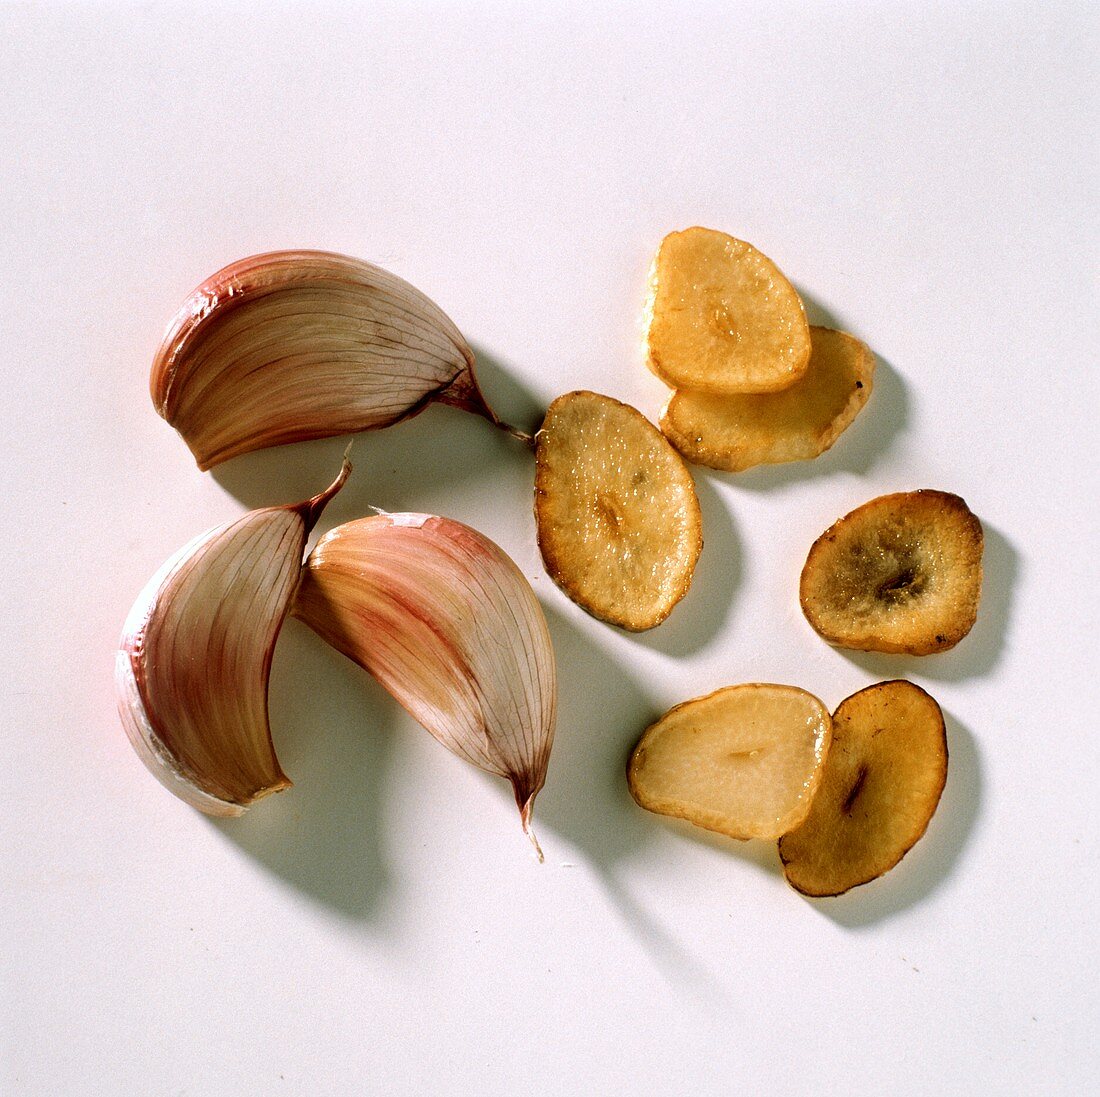 Garlic cloves and roasted garlic slices